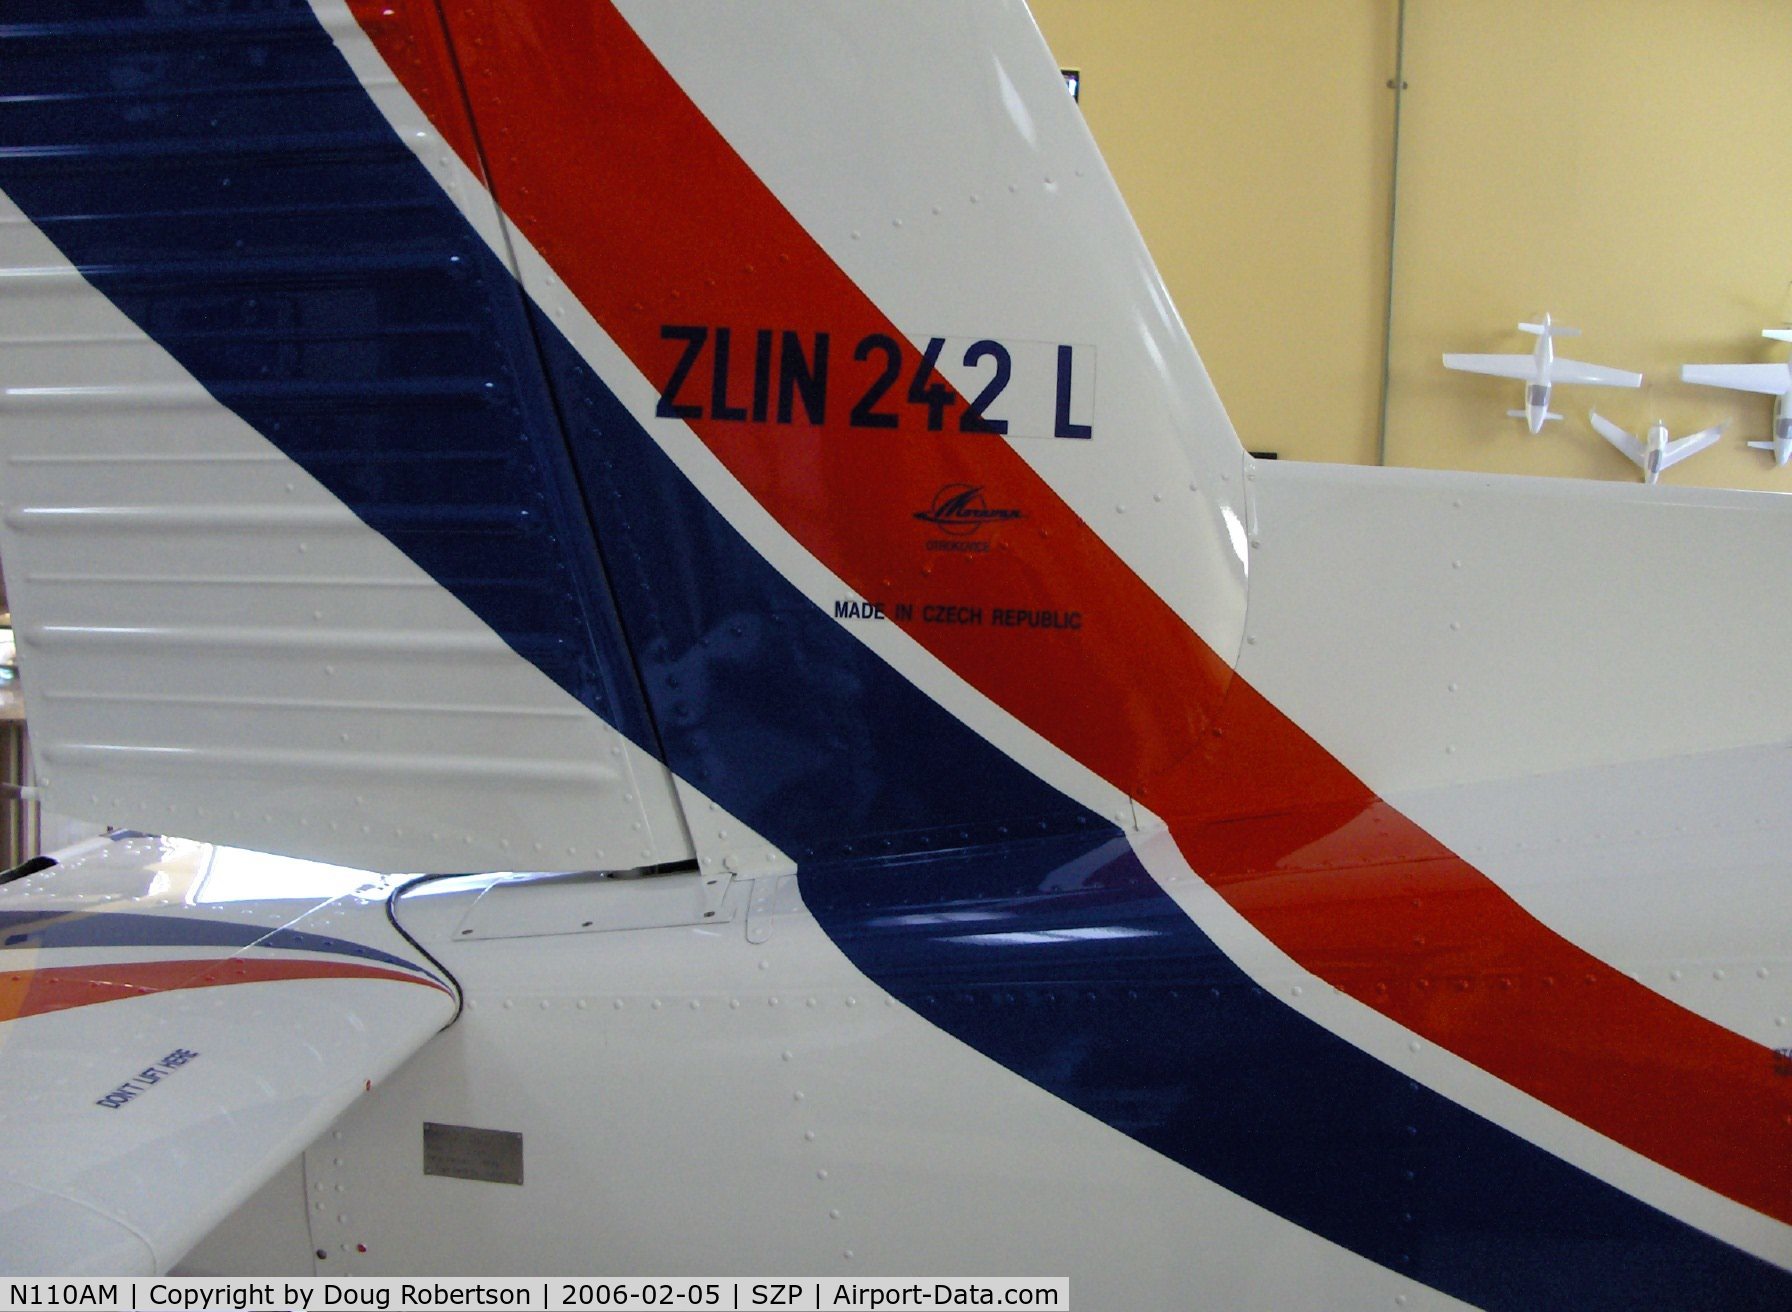 N110AM, 1996 Zlin Z-242L C/N 0727, 1996 Moravan Zlin 242L, Lycoming AEIO-360-B 200 Hp, fully aerobatic, tail nomenclature, made in Czech Republic